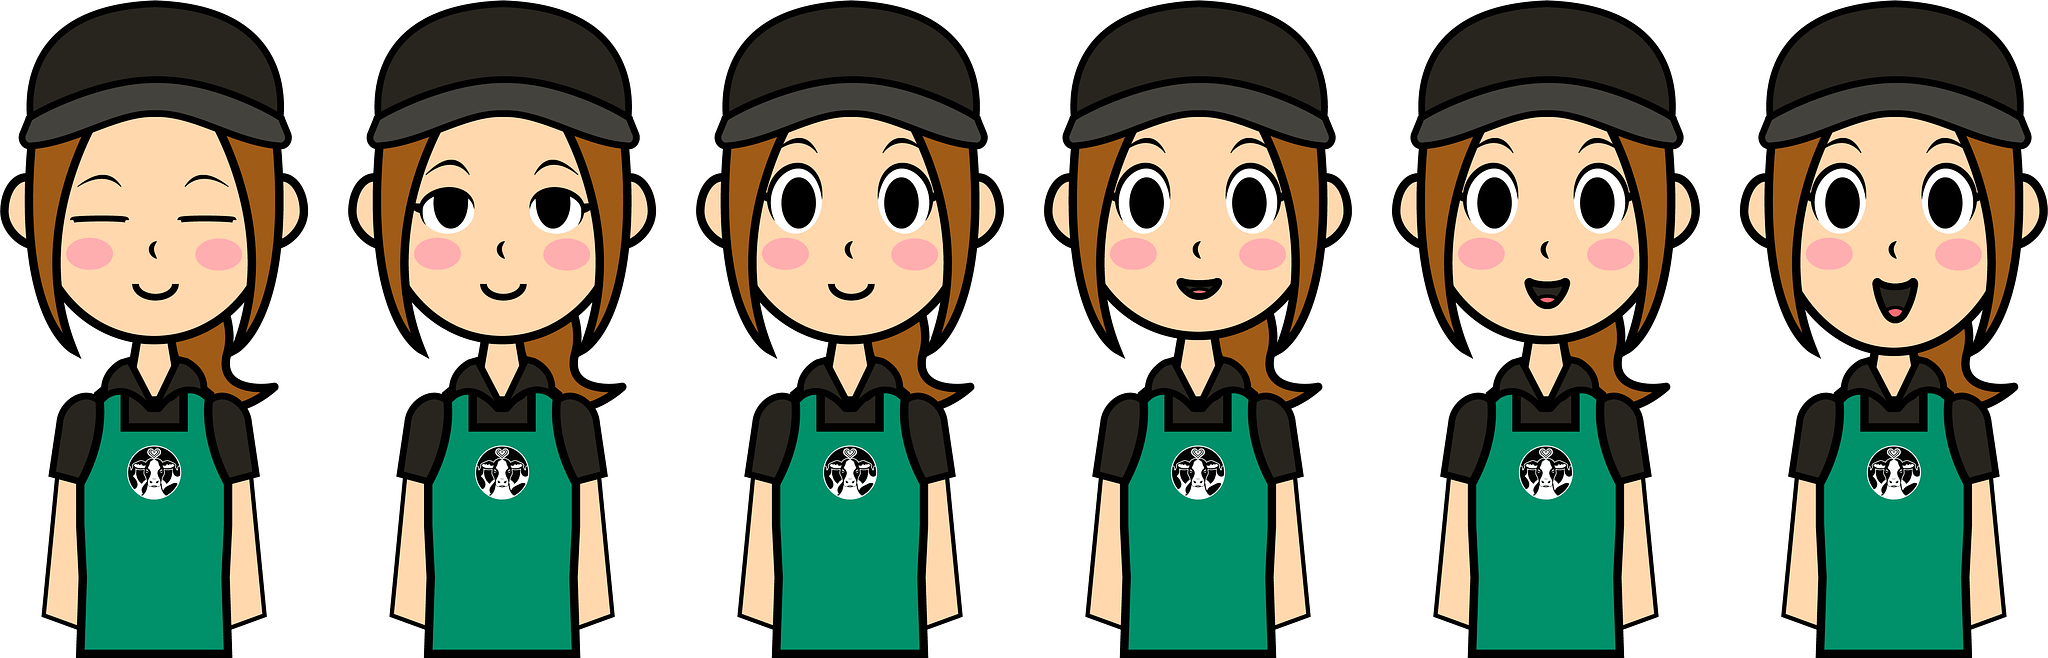 Spritemap of an animated Starbucks inspired barista